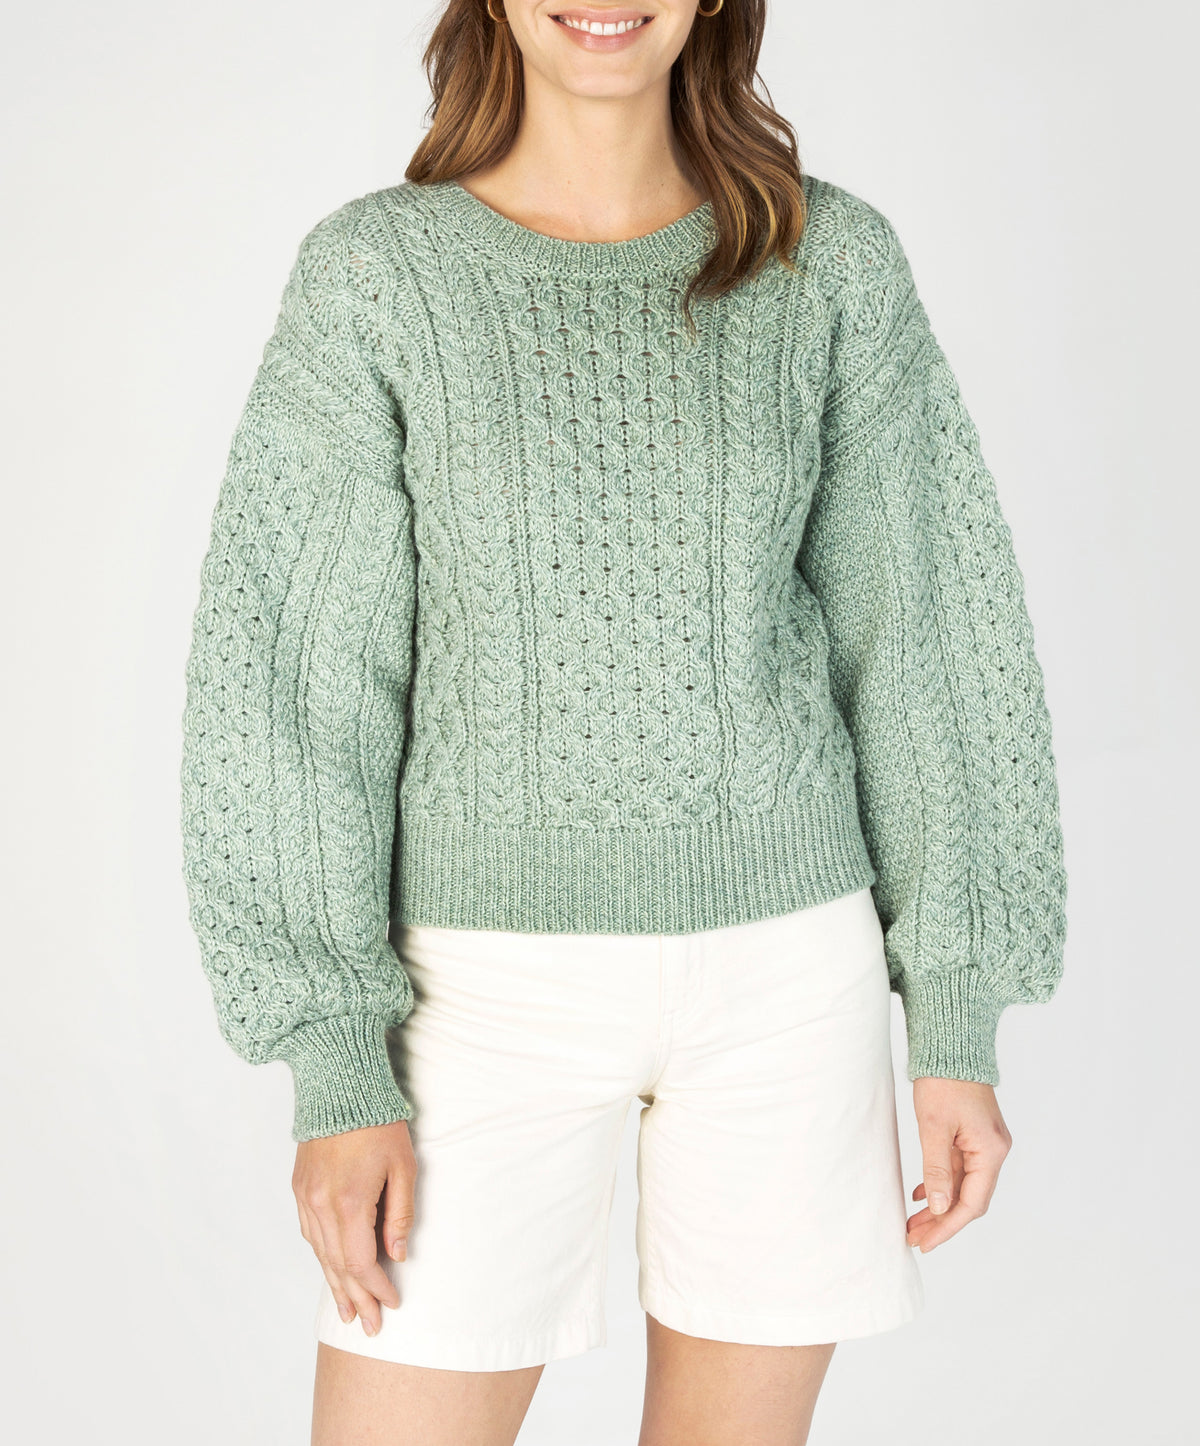 IrelandsEye Knitwear Honeysuckle Cropped Aran Sweater Sage Marl